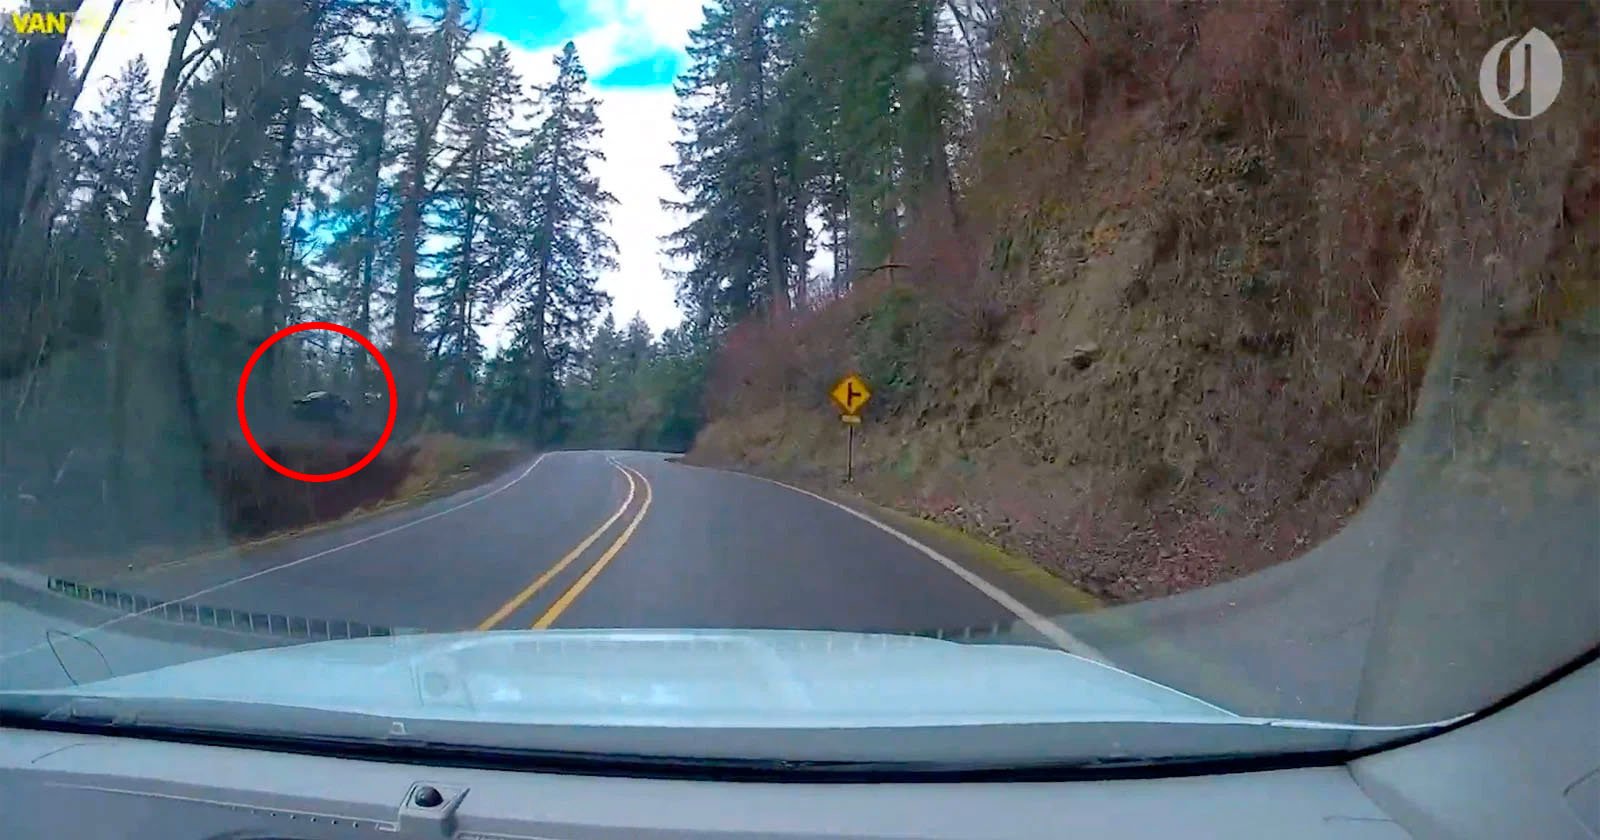 Horrifying Dashcam Video Shows Car Fly Down 200-Foot Embankment